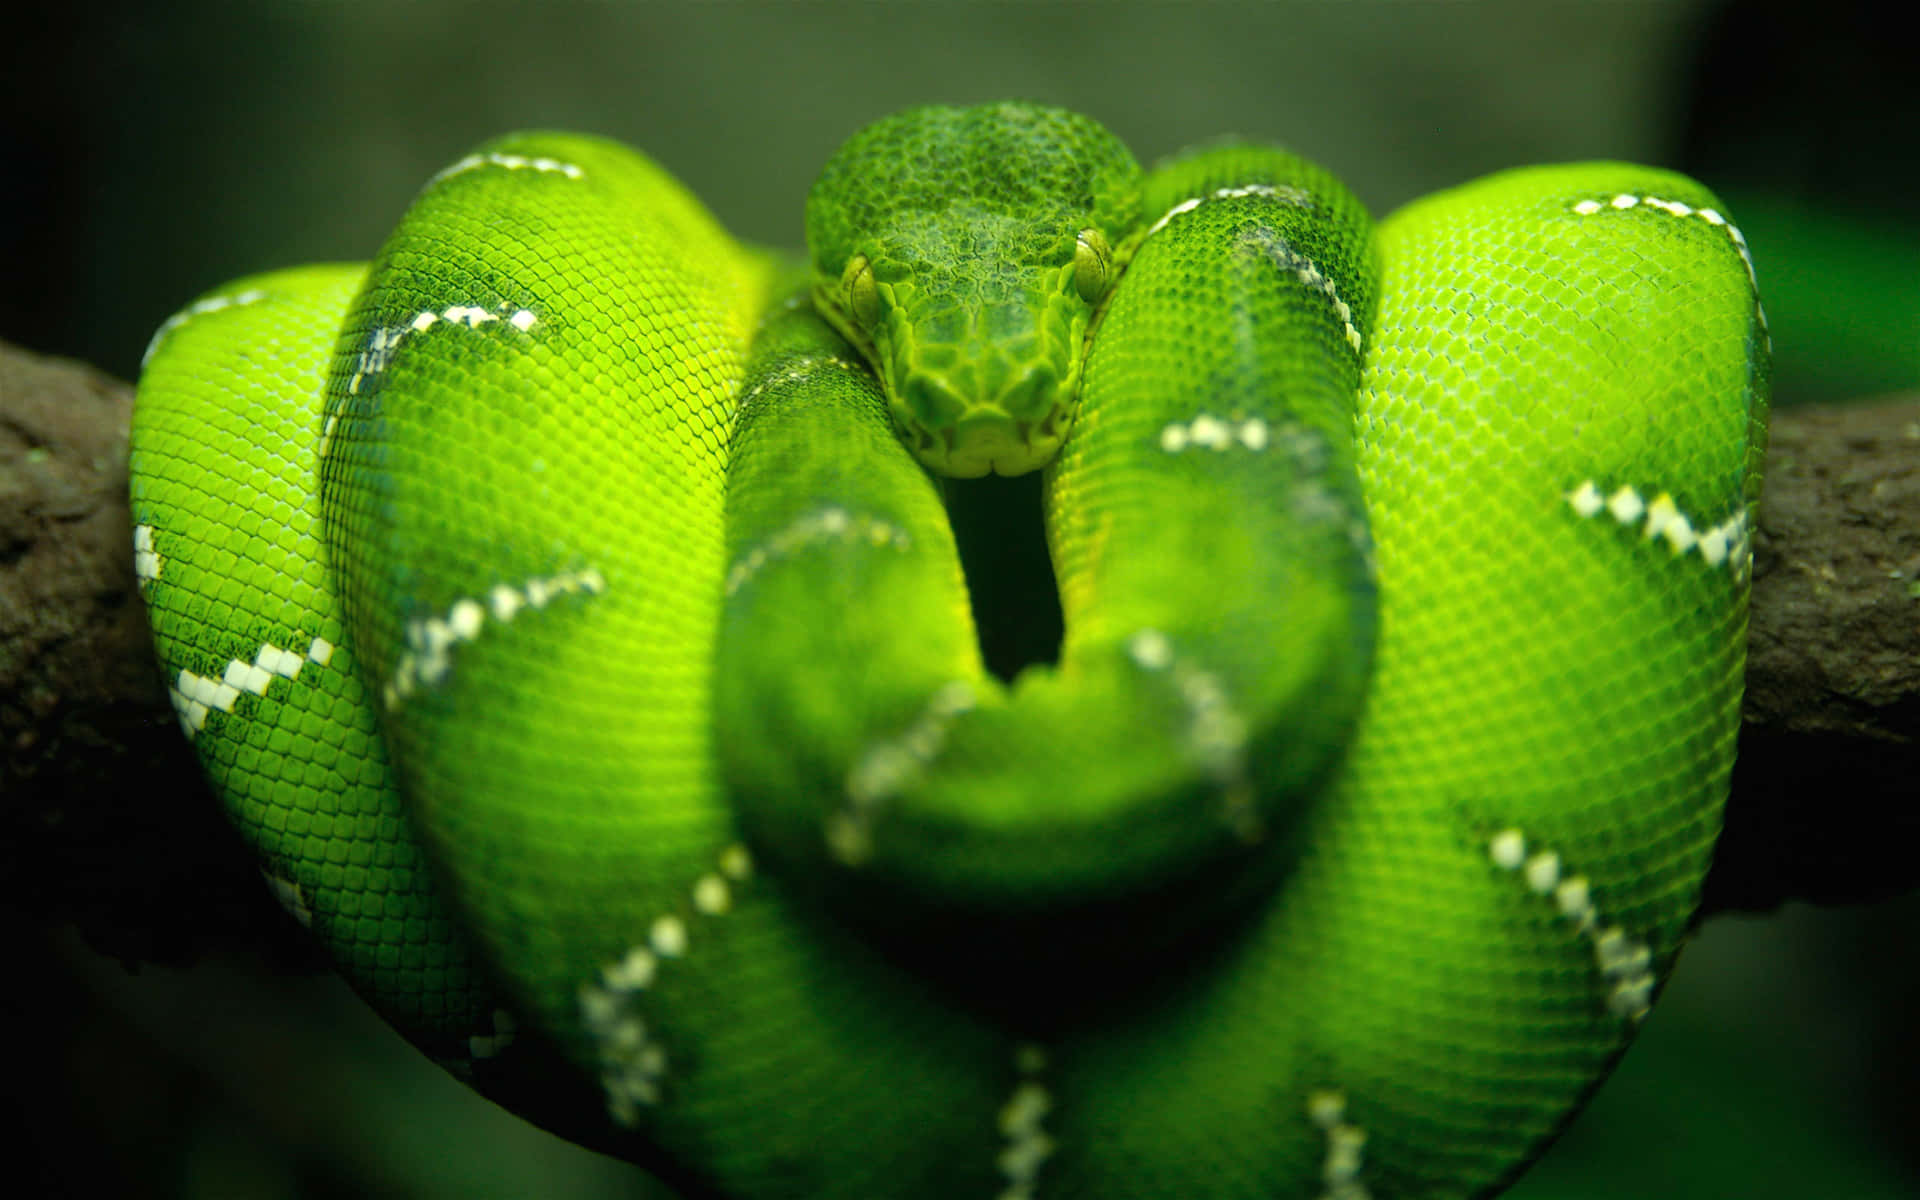 "Striking macro image of a venomous green snake"